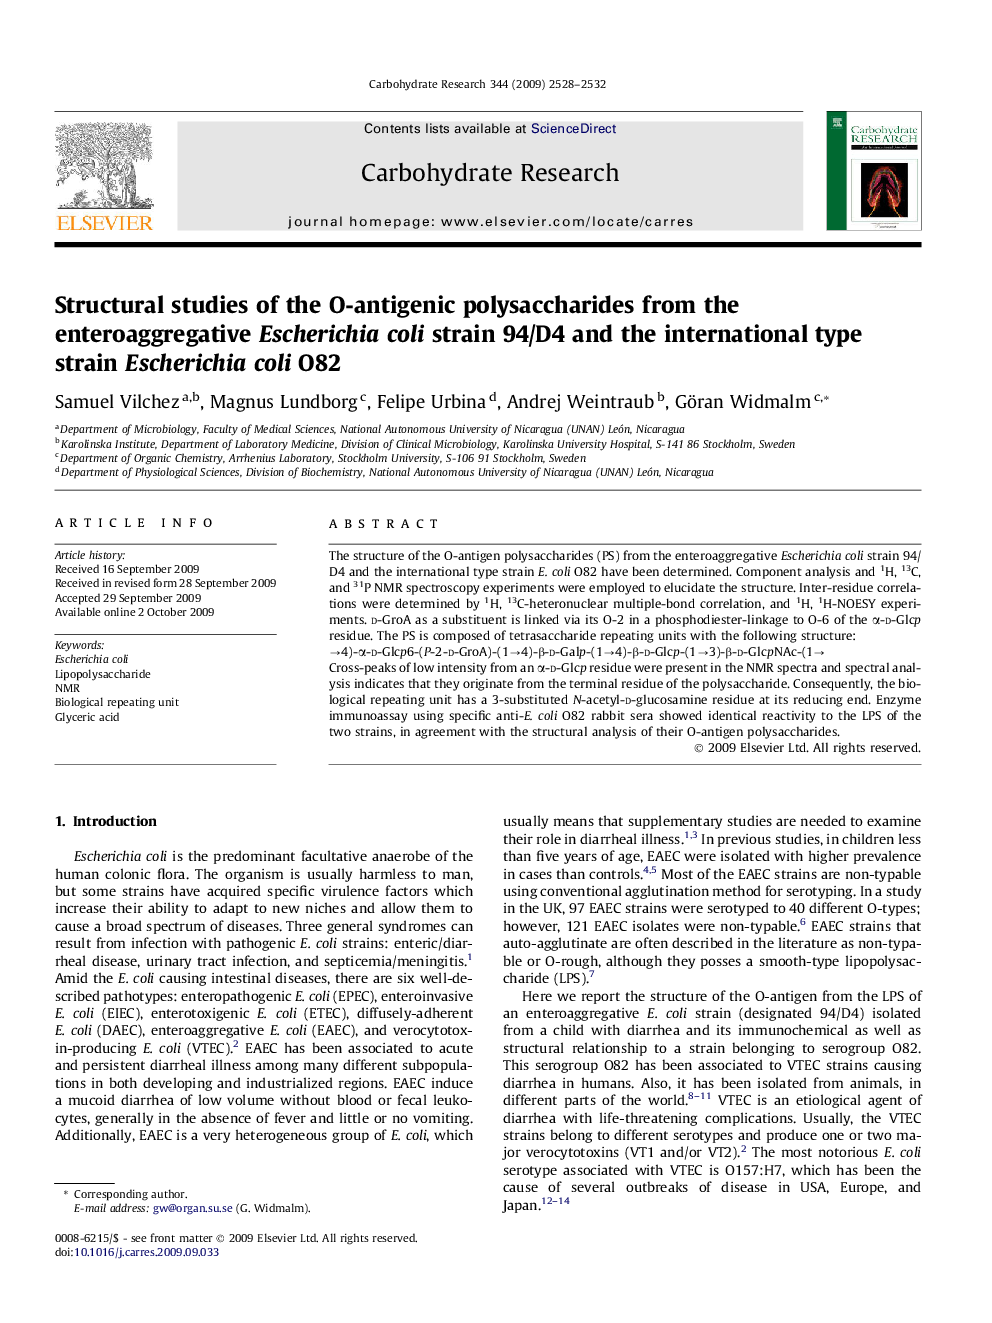 Structural studies of the O-antigenic polysaccharides from the enteroaggregative Escherichia coli strain 94/D4 and the international type strain Escherichia coli O82